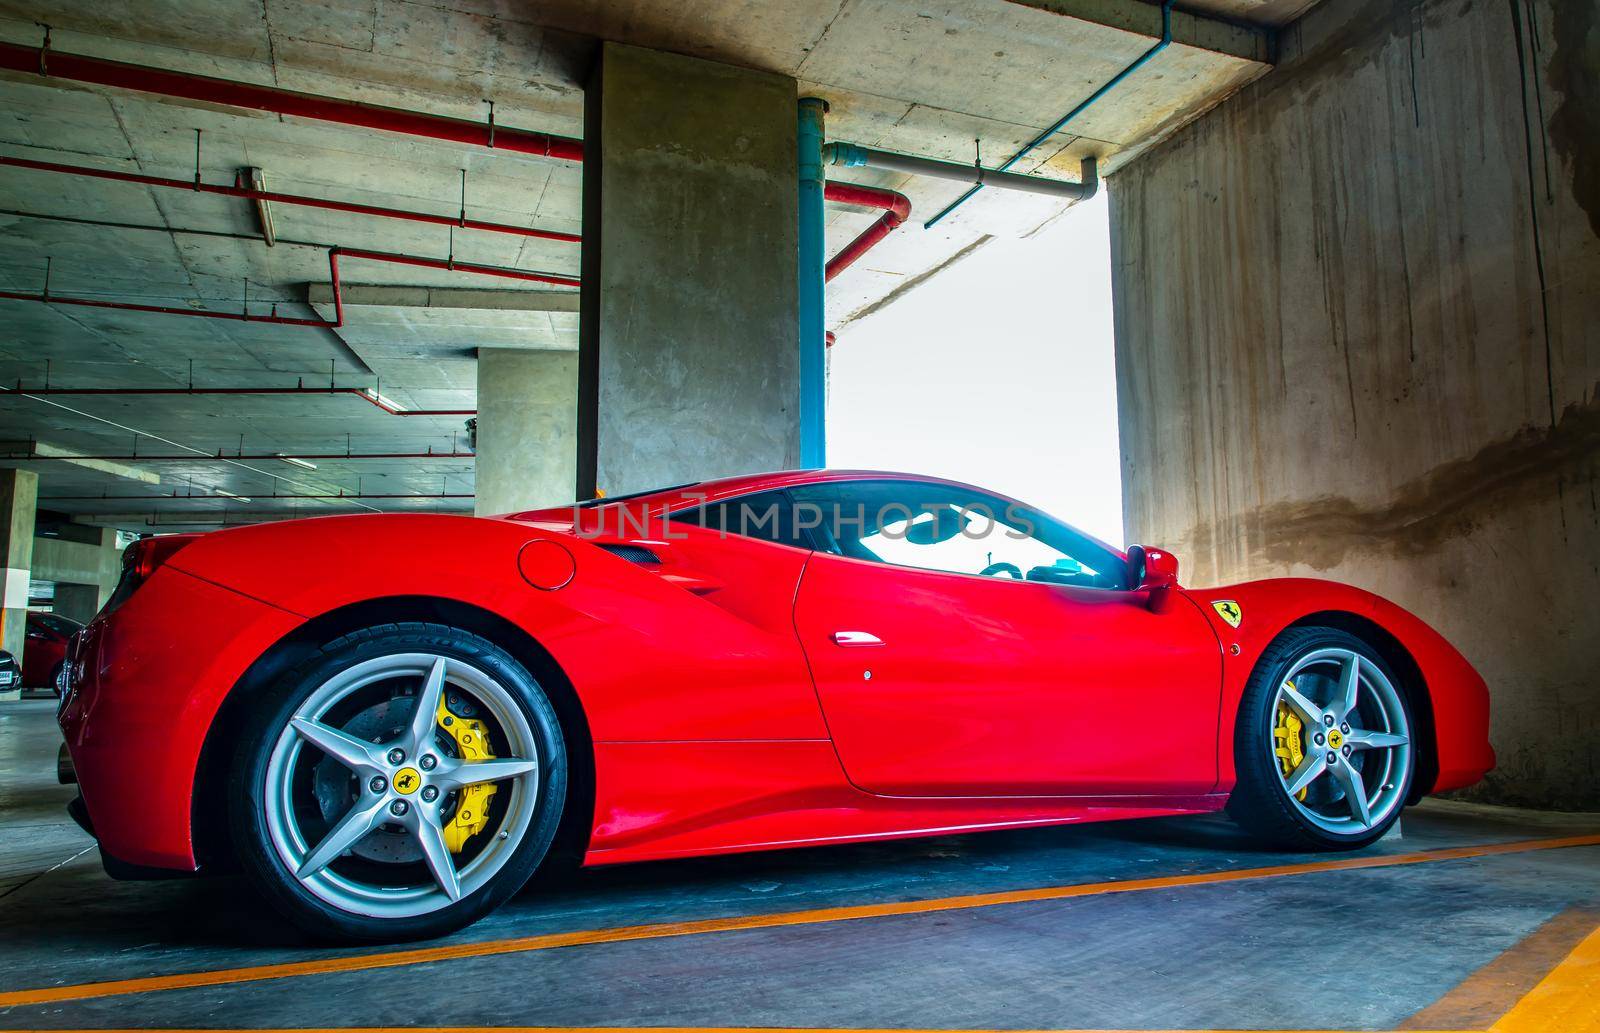 Bangkok, Thailand - 06 Jun 2021 : Side view of Red metallic Ferrari car in the parking lot. Ferrari is Italian sports car. Selective focus.